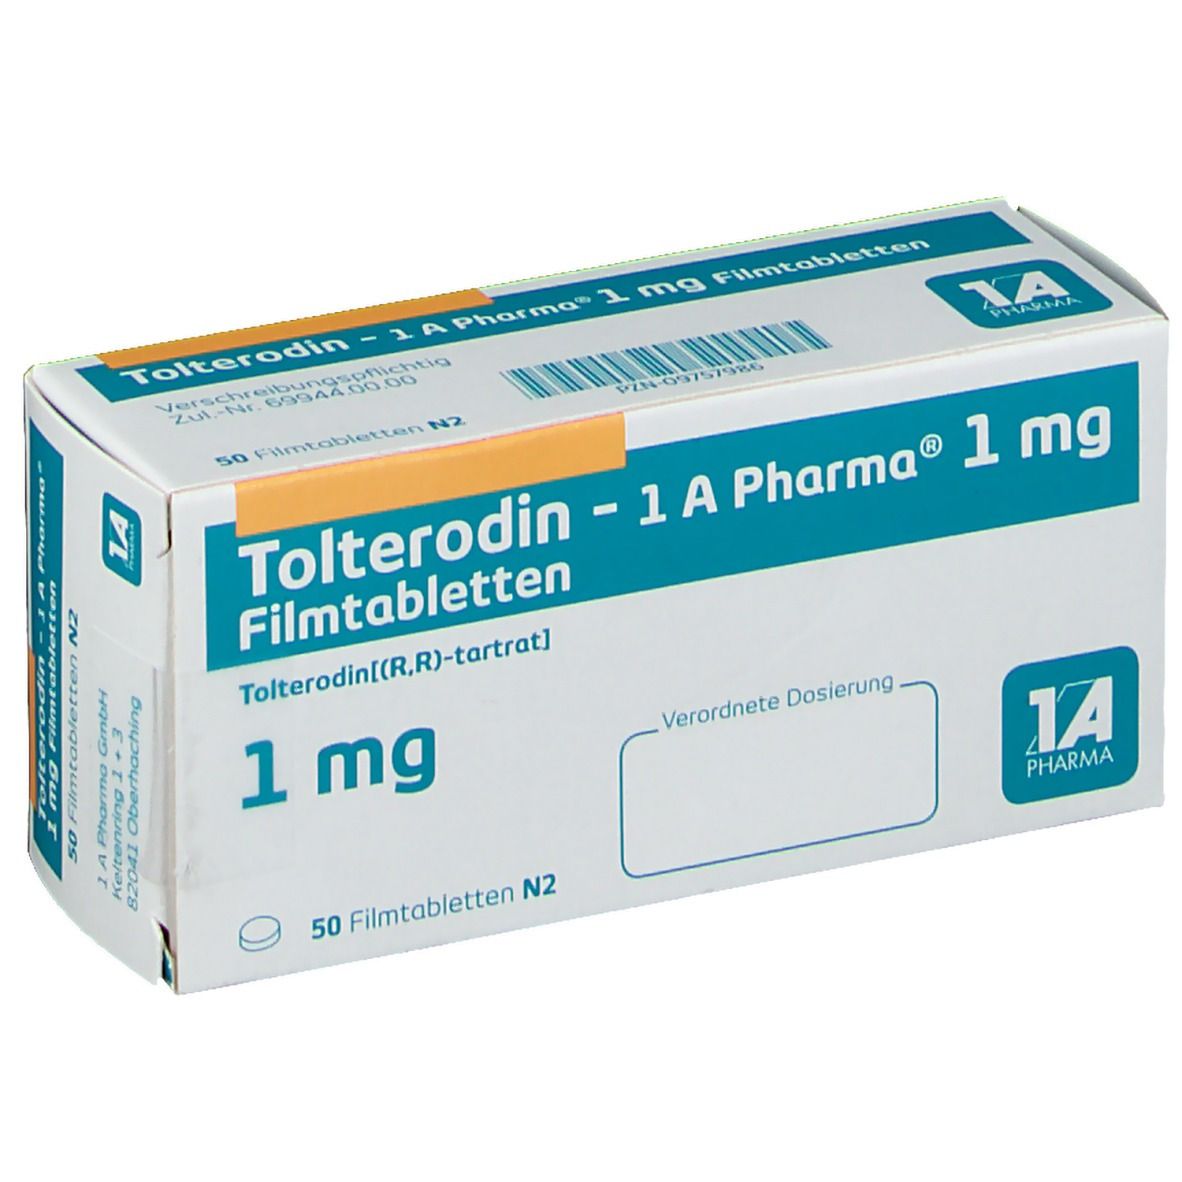 Tolterodin - 1 A Pharma® 1 mg